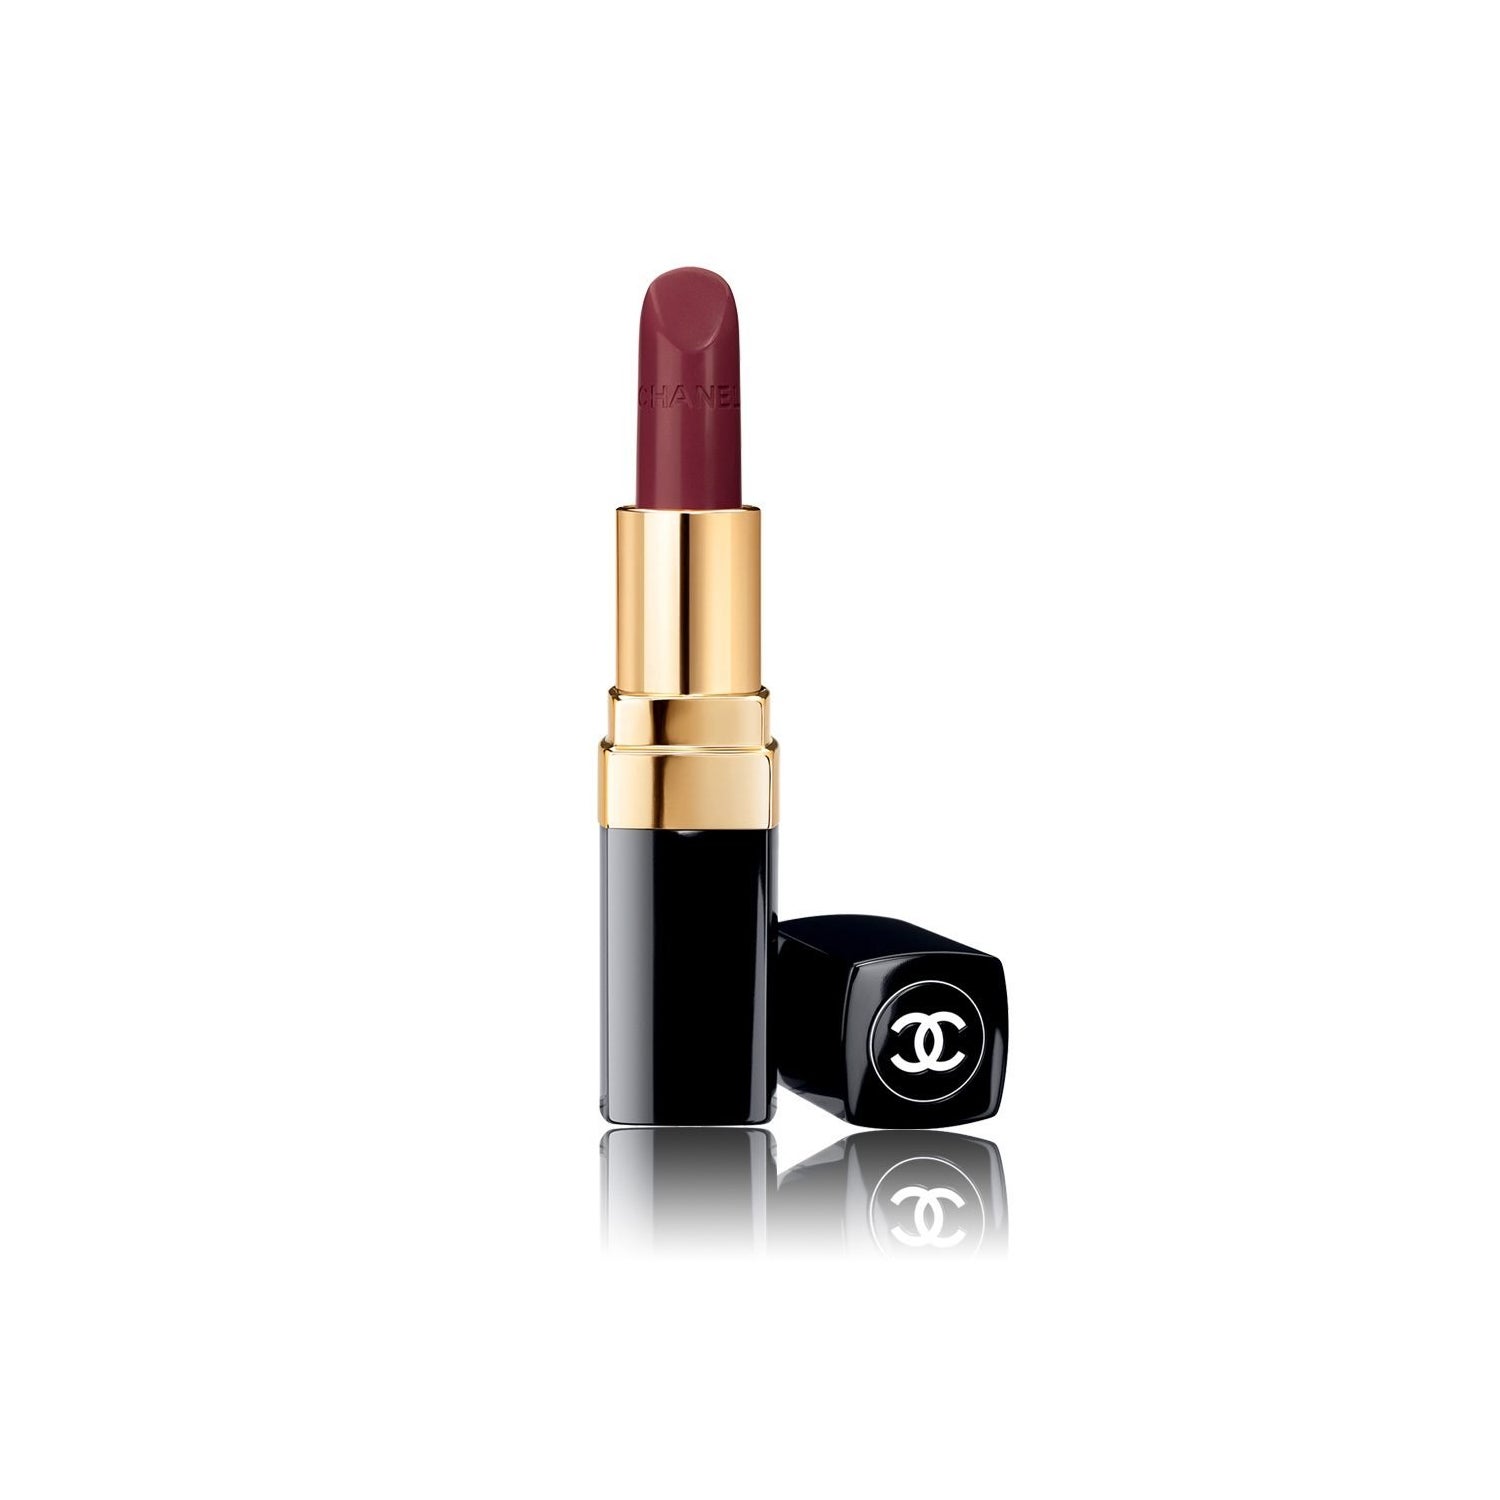 Chanel Rouge Coco Shine Hydrating Sheer Lipshine 454 Jean 0.11 oz